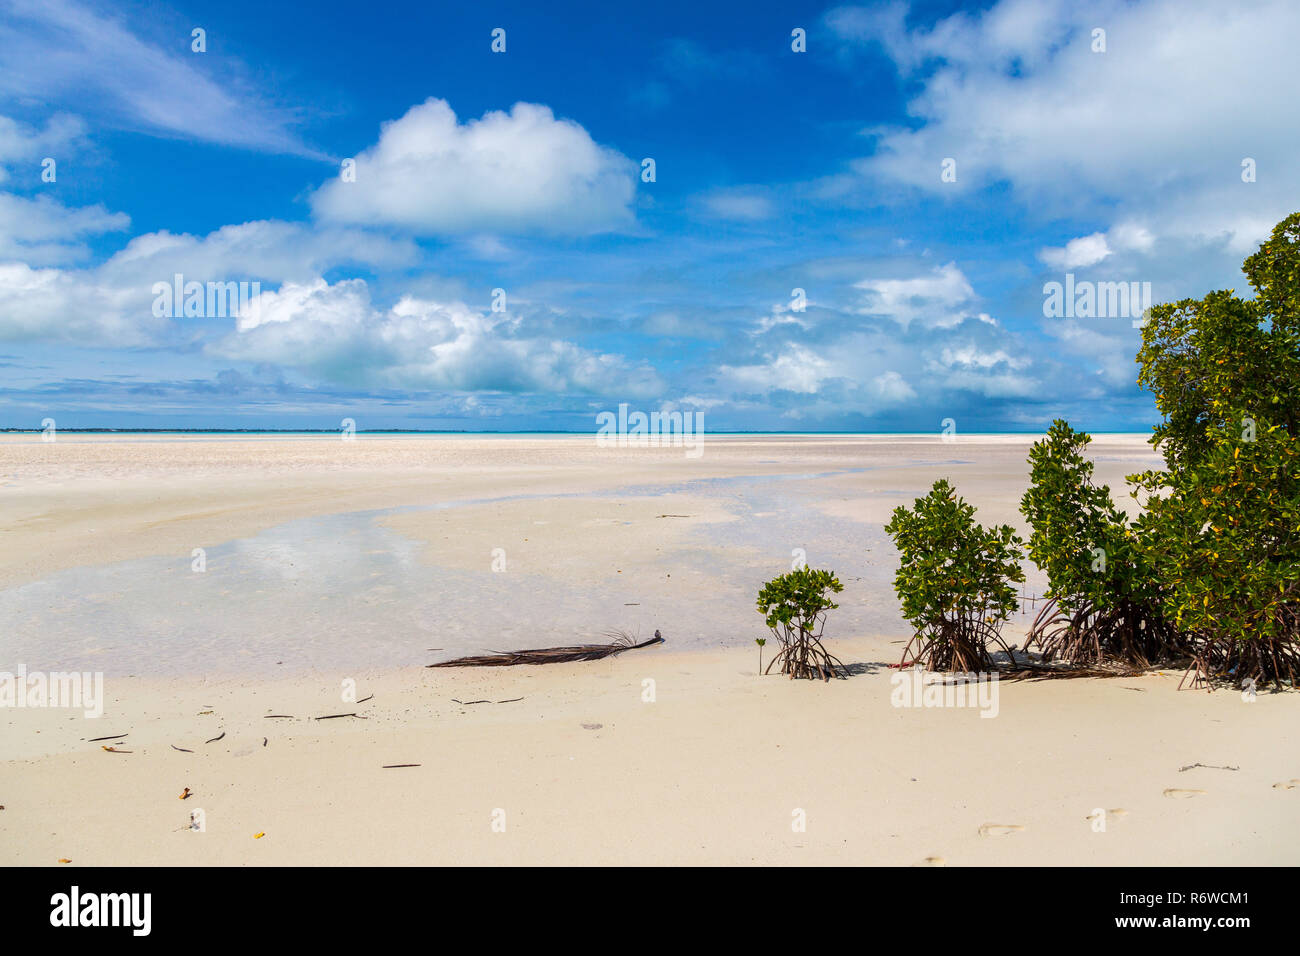 Paradiso di sabbia spiaggia di azure blu turchese laguna poco profonda, Nord atollo di Tarawa, Kiribati, Isole Gilbert, Micronesia, Oceania. Palme e mangrovie Foto Stock